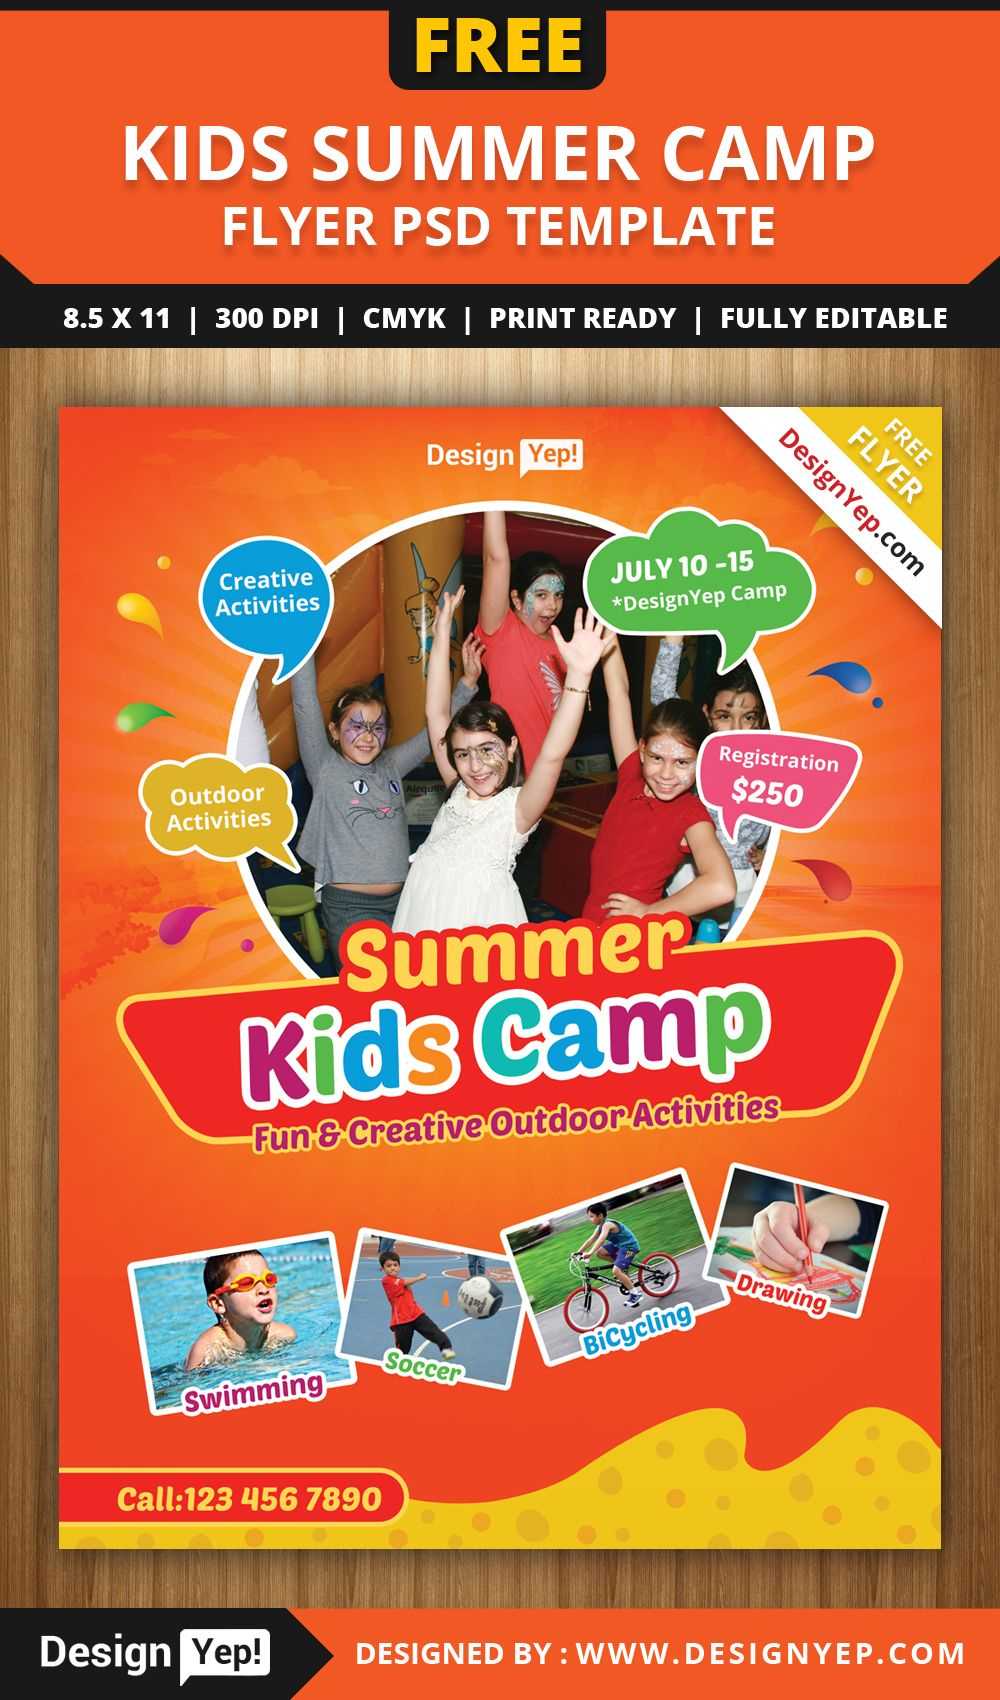 Free Kids Summer Camp Flyer Psd Template 8585 Designyep Intended For Summer Camp Brochure Template Free Download